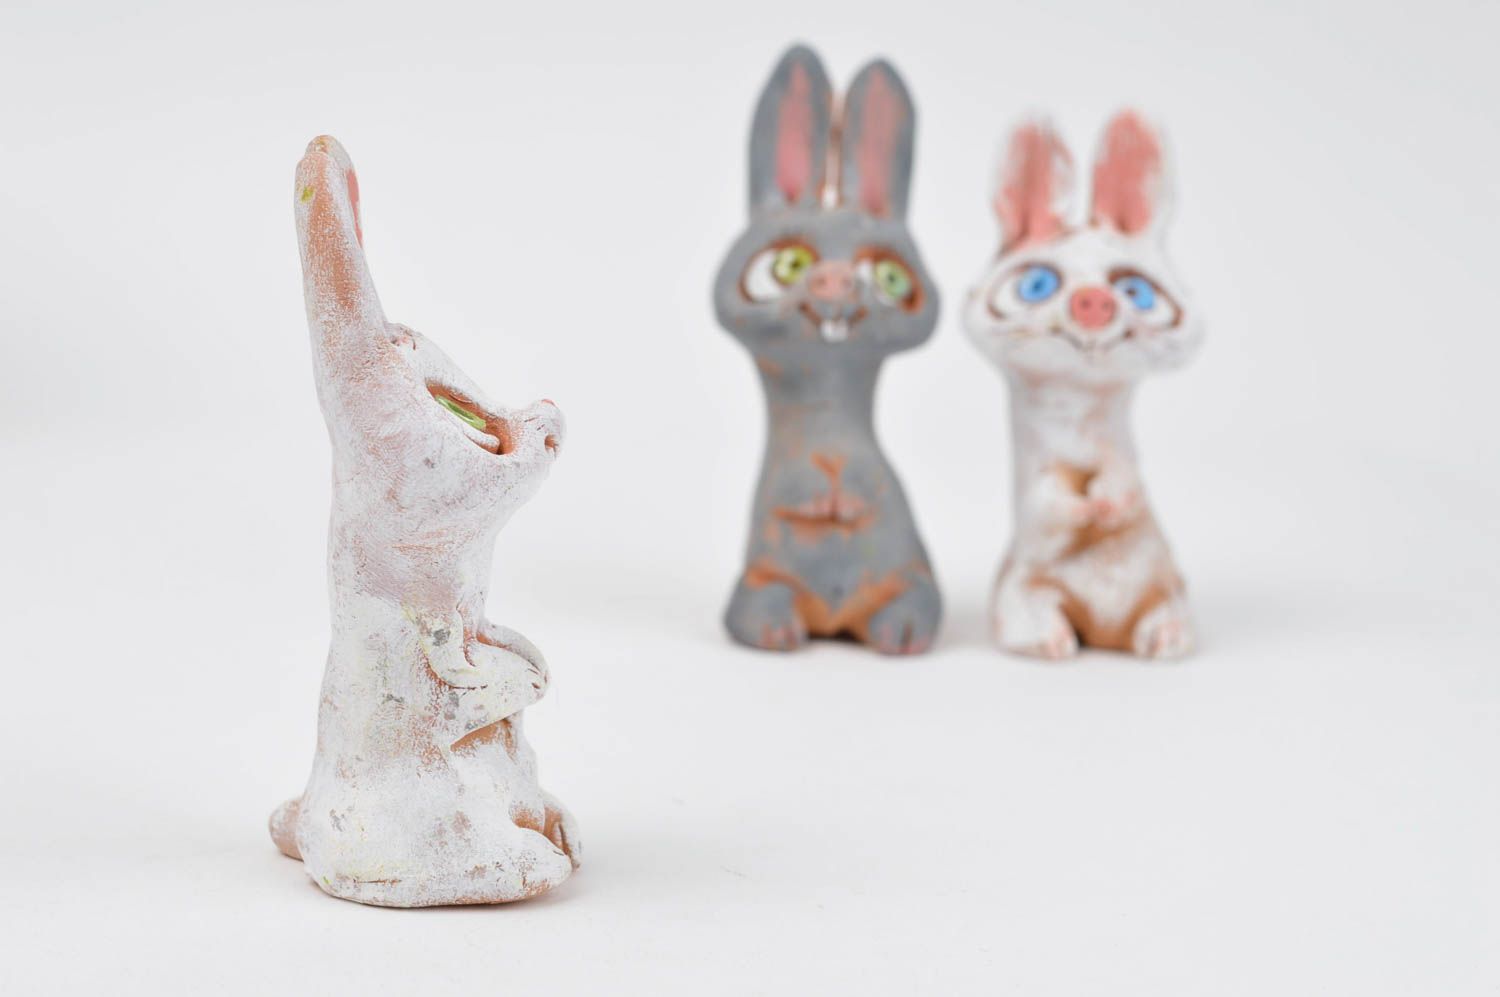 Handmade designer statuette 3 ceramic rabbits unusual home decor ideas photo 3